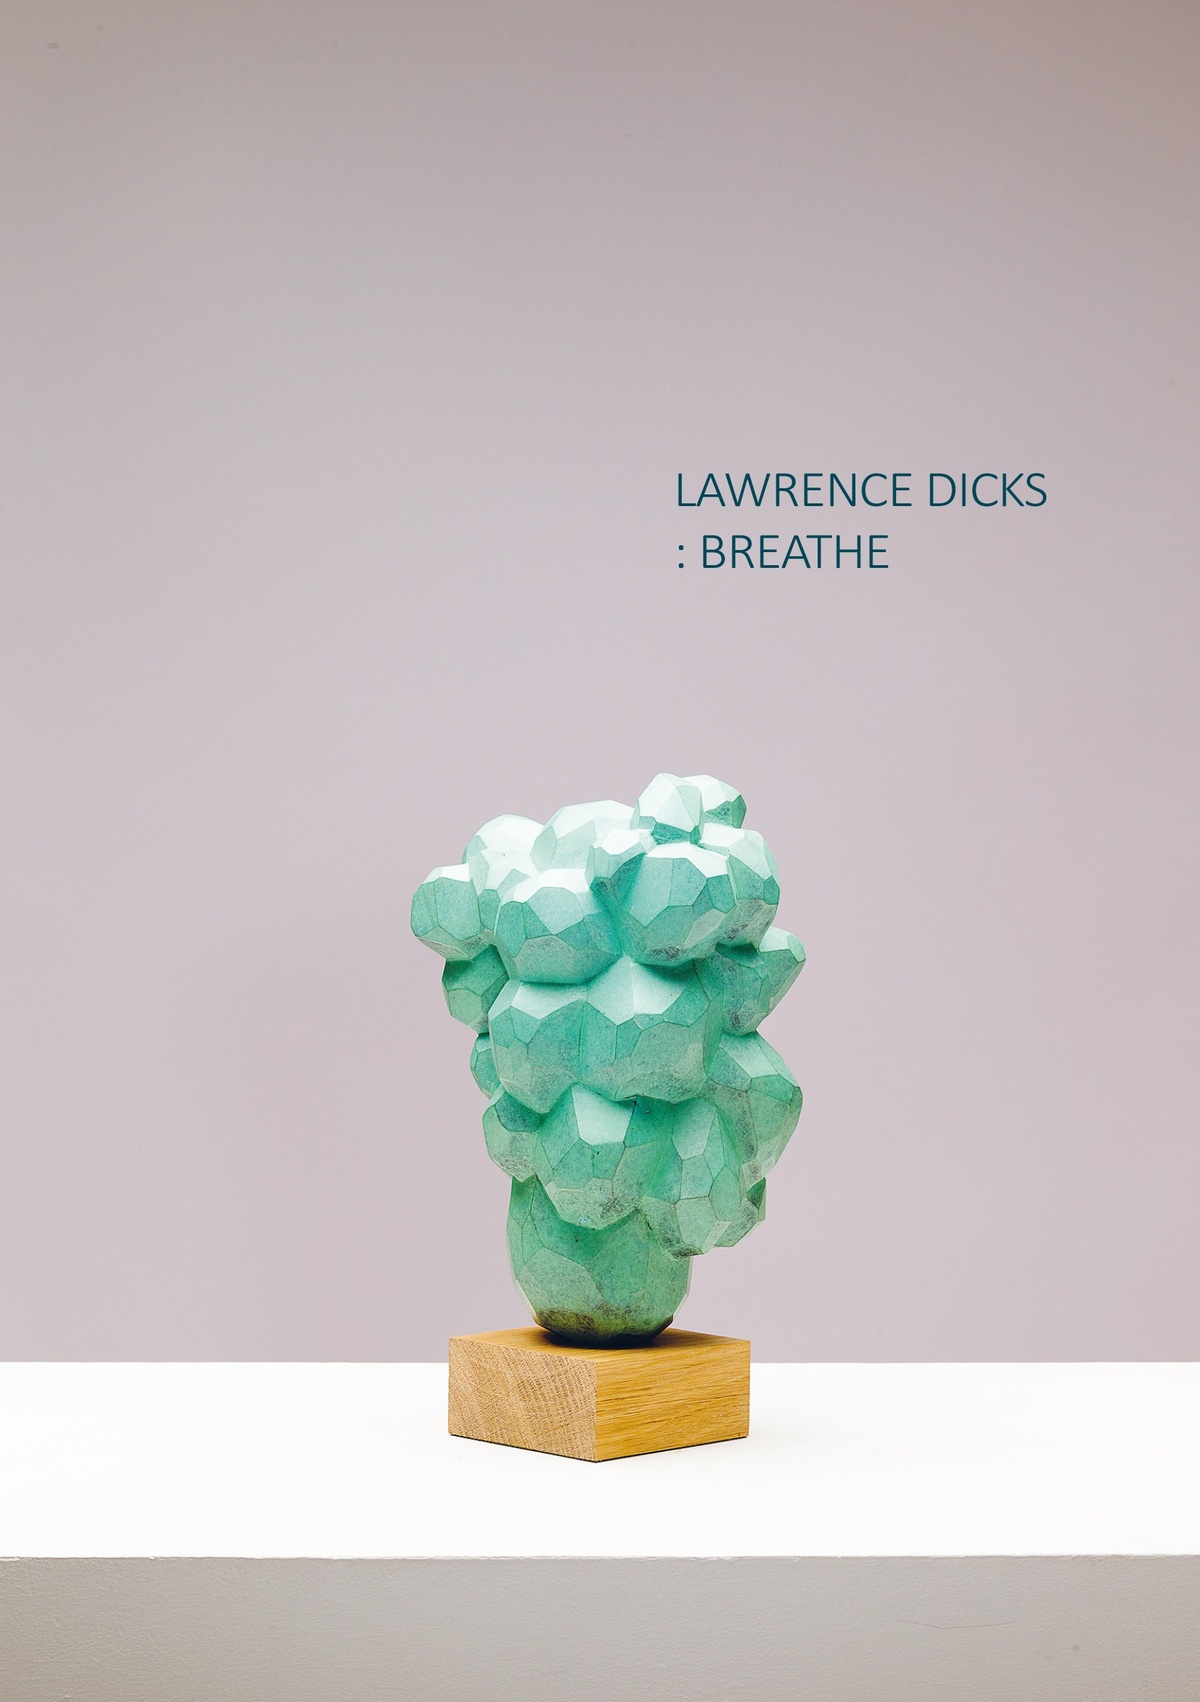 Lawrence Dicks